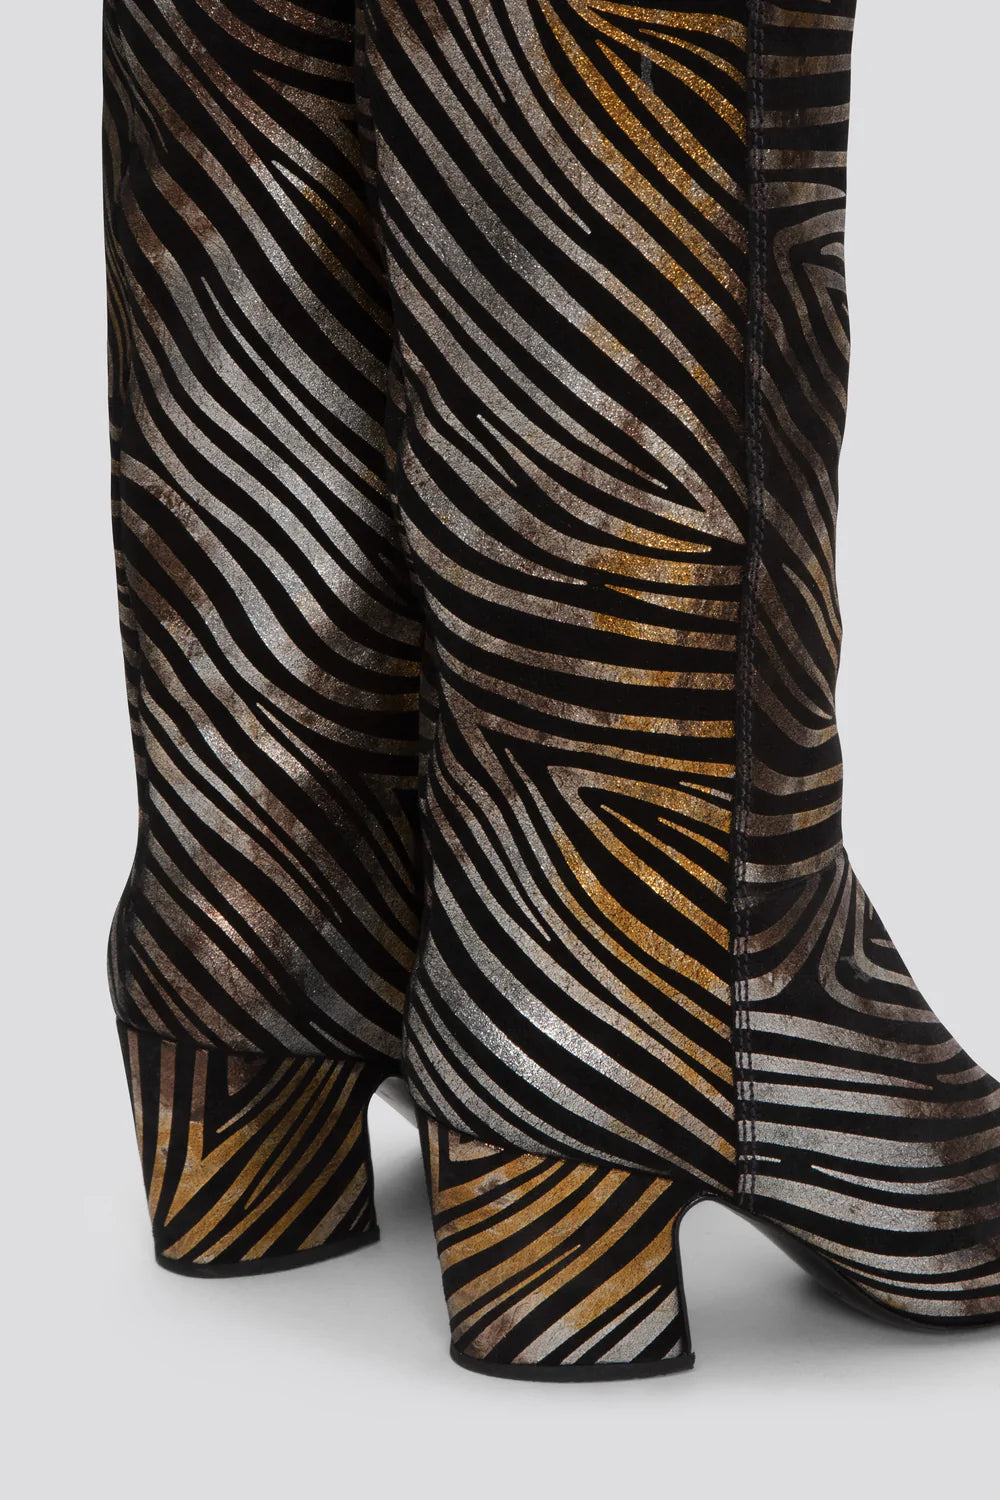 Rachel Comey- Boeri Boot: Zebra